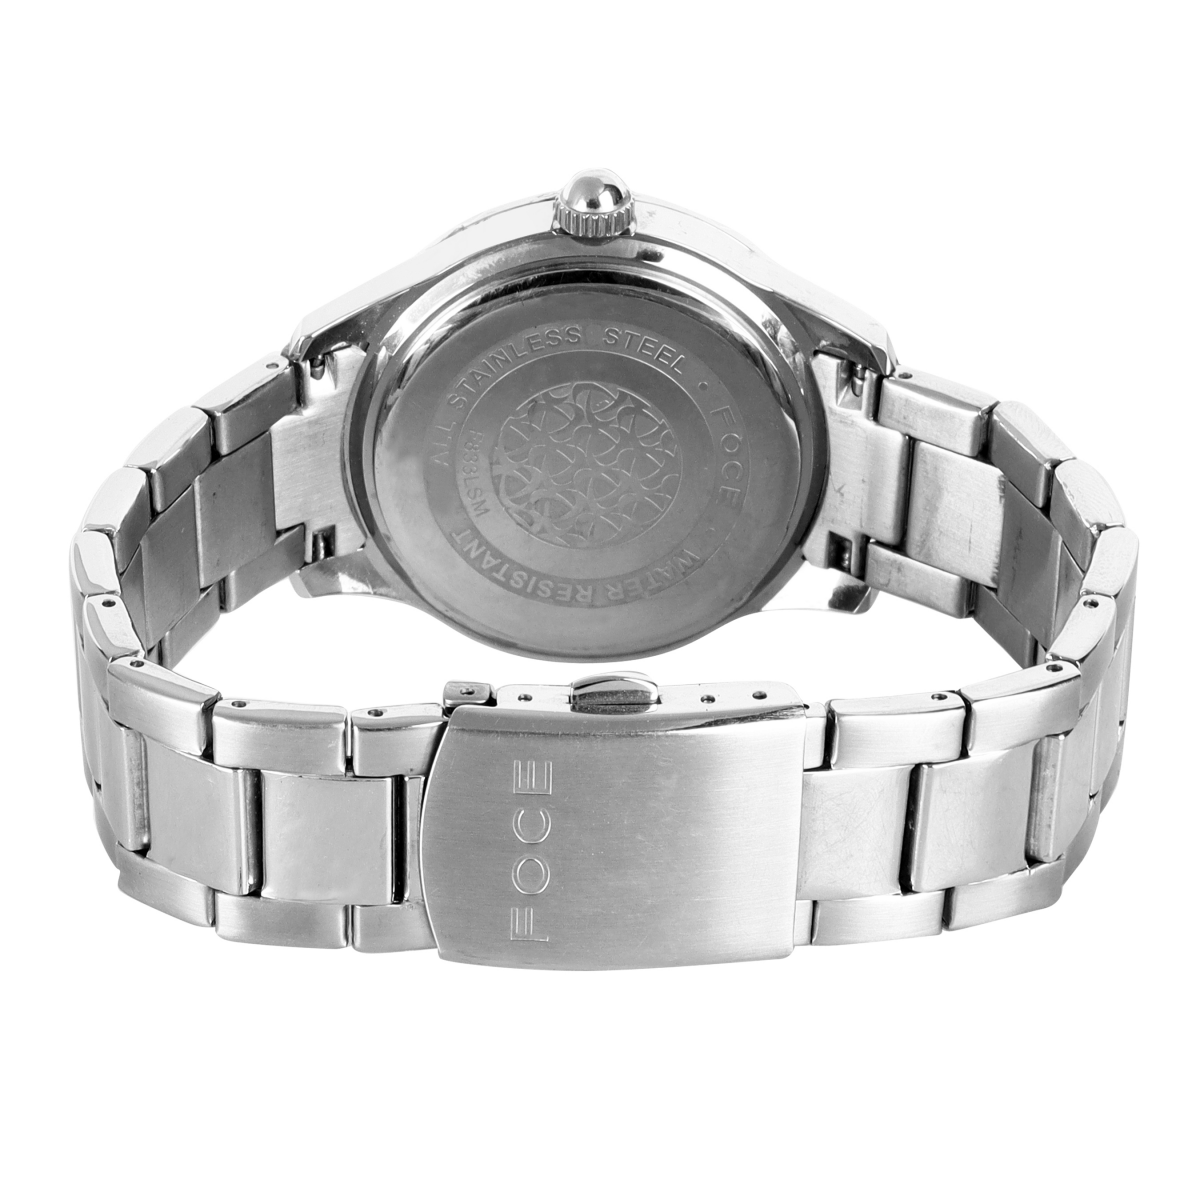 FOCE Multifunction White Dial Metal Belt Watch For Women-F833LSM-WHITE